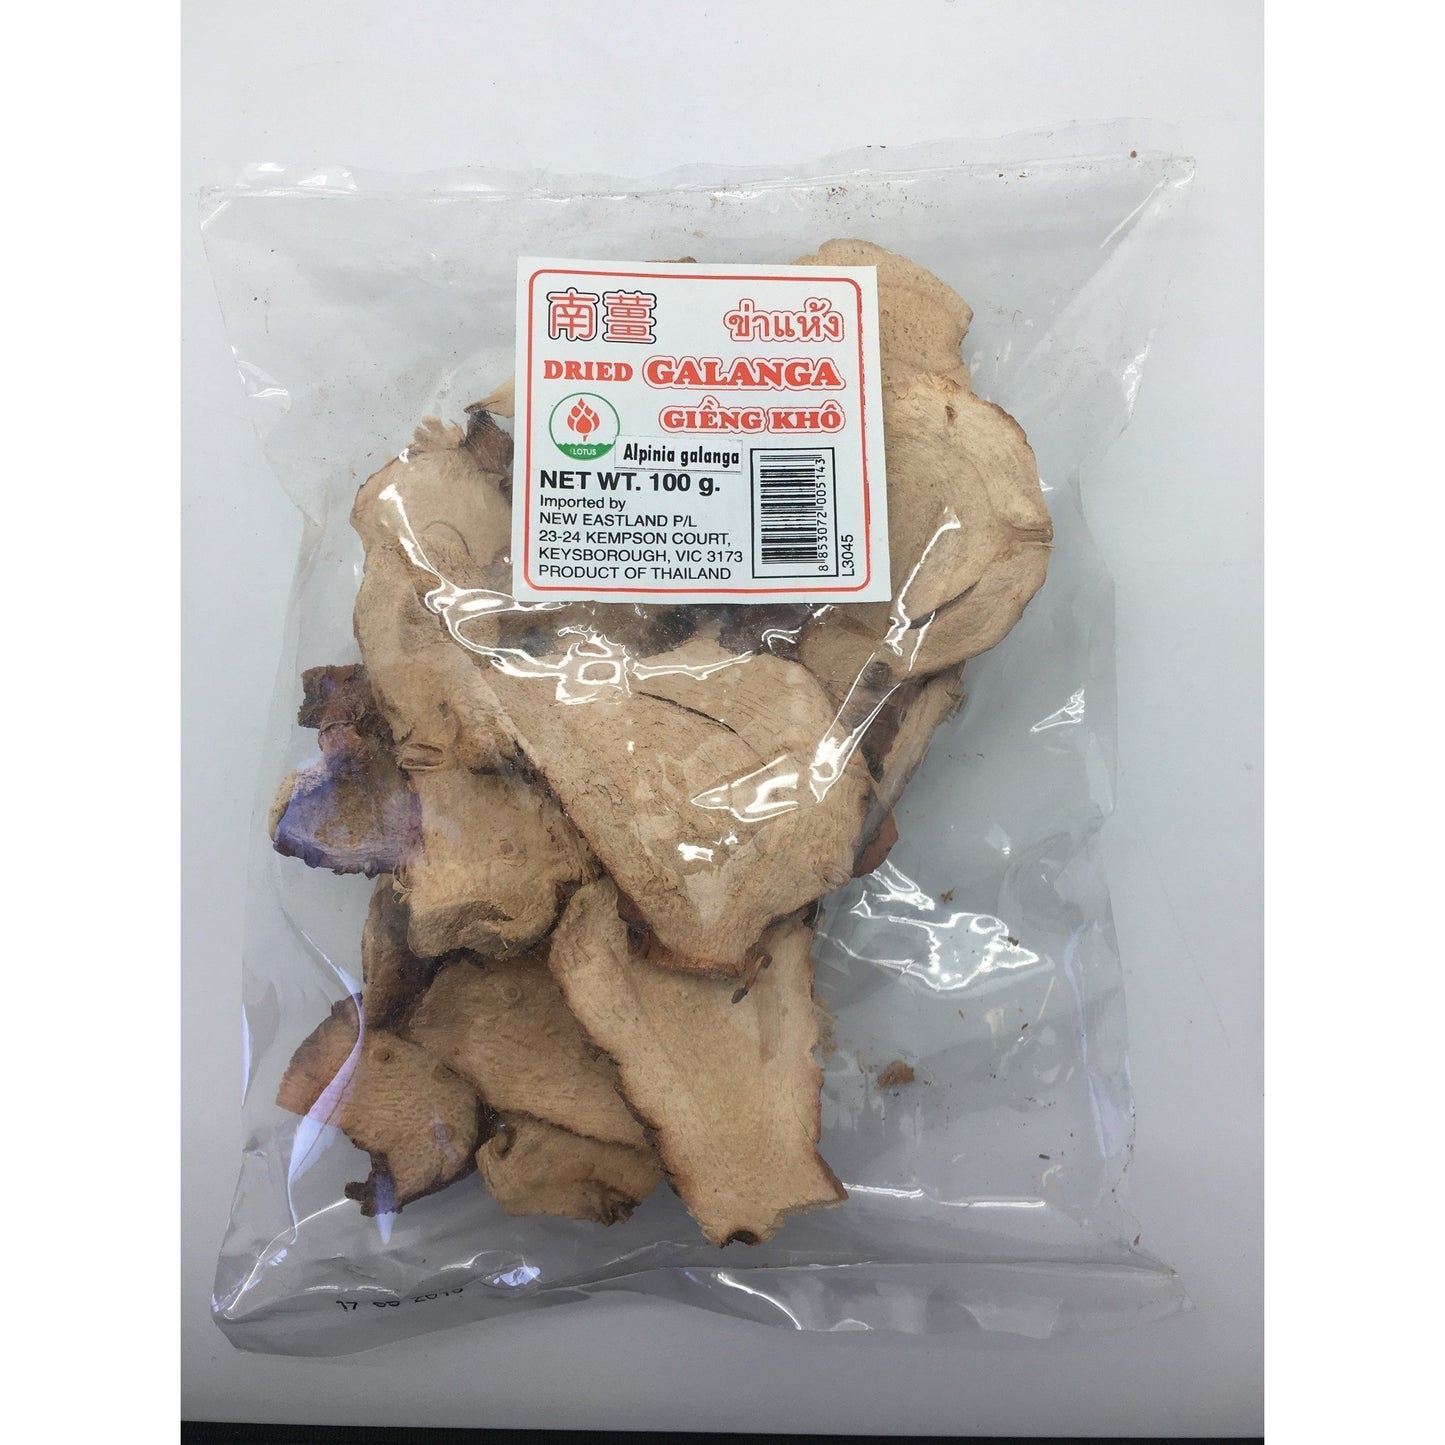 D153 Lotus Brand - Dried Galanga 100g - 100 bags / 1 CTN - New Eastland Pty Ltd - Asian food wholesalers